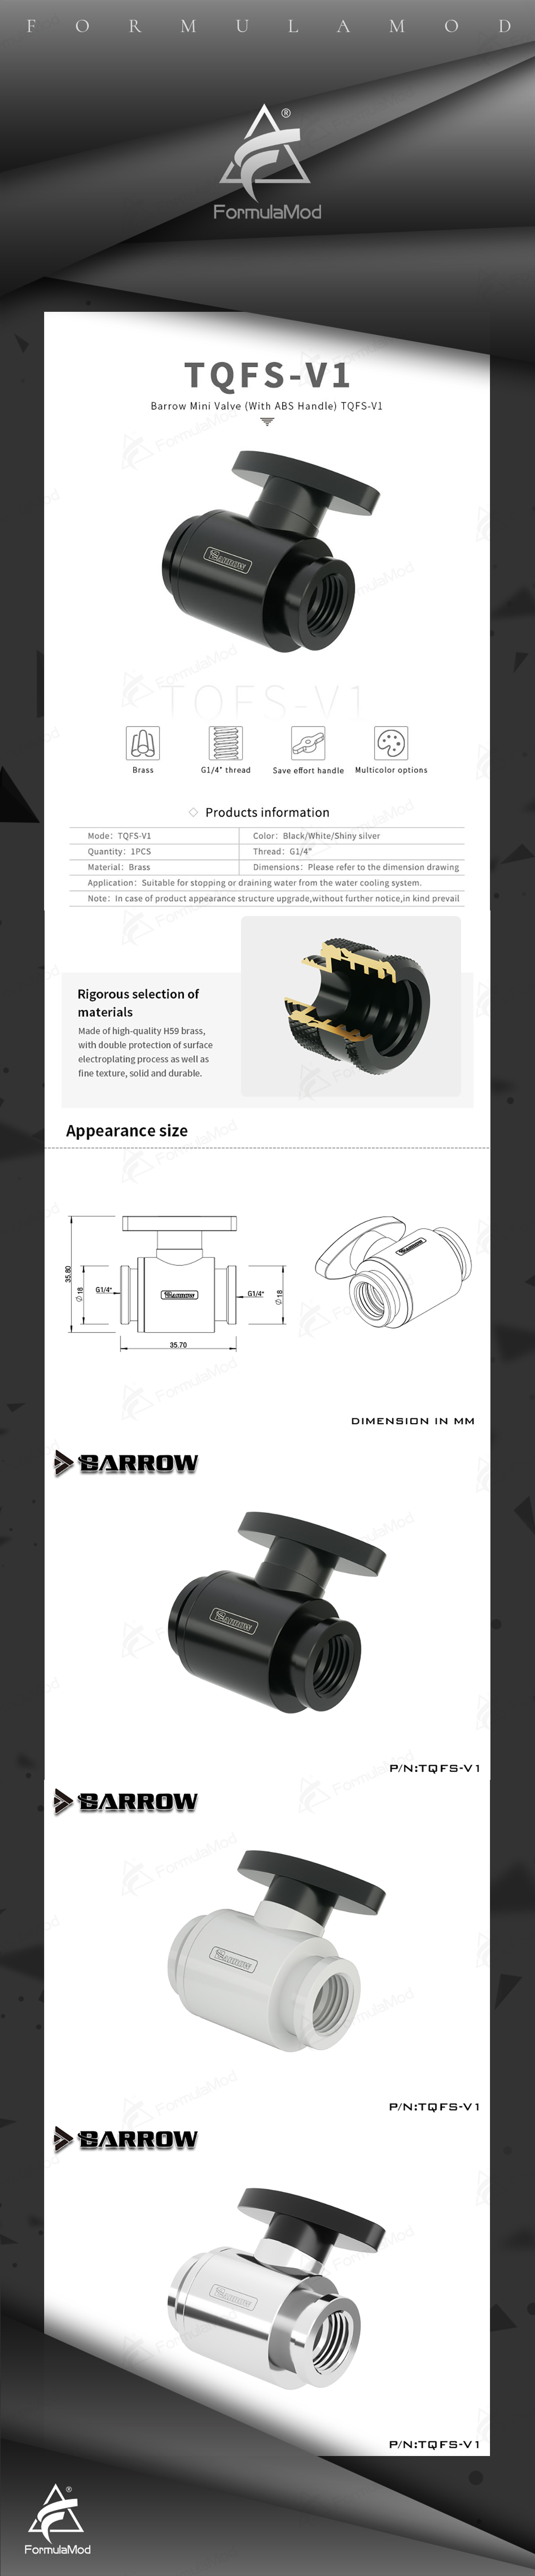 Barrow G1/4 MINI Handle Double Internal Sealing Ball Valve, Plastic Handle, Brass Body, TQFS-V1  